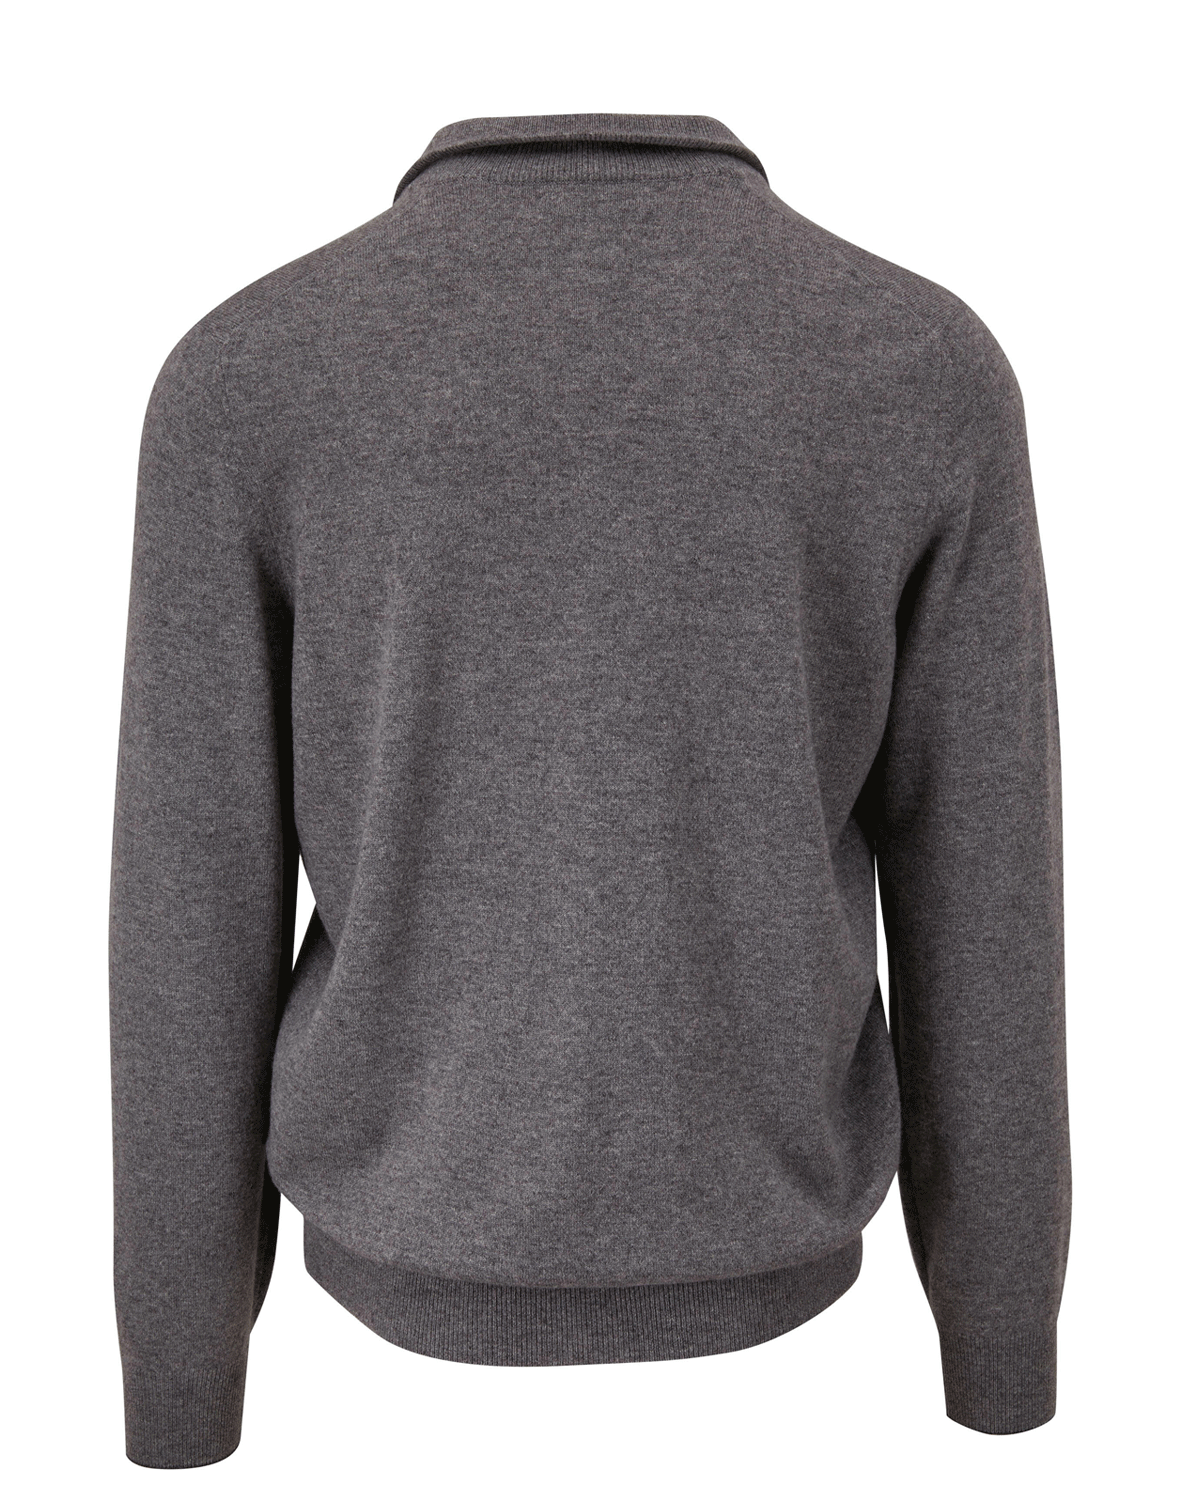 Charcoal Cashmere Half-Zip Sweater